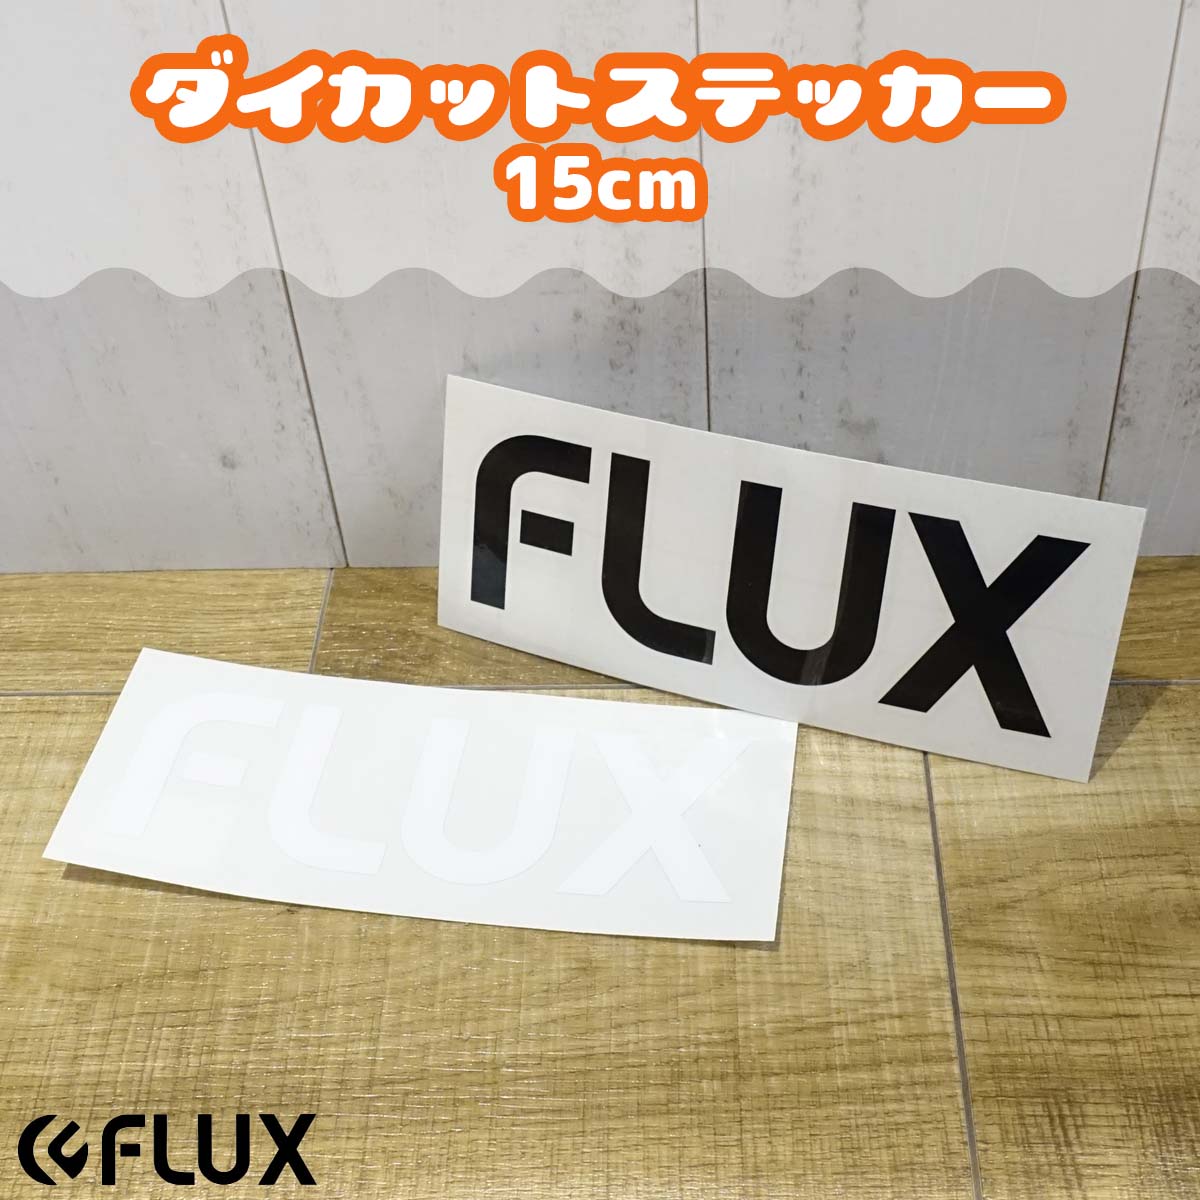 FLUX フラックス ステッカー 15cm ロゴ ダイカット ッティング シール デカール 転写 スノーボード スノボー アクセサリー 白 黒 ホワイト ブラック 日本正規品